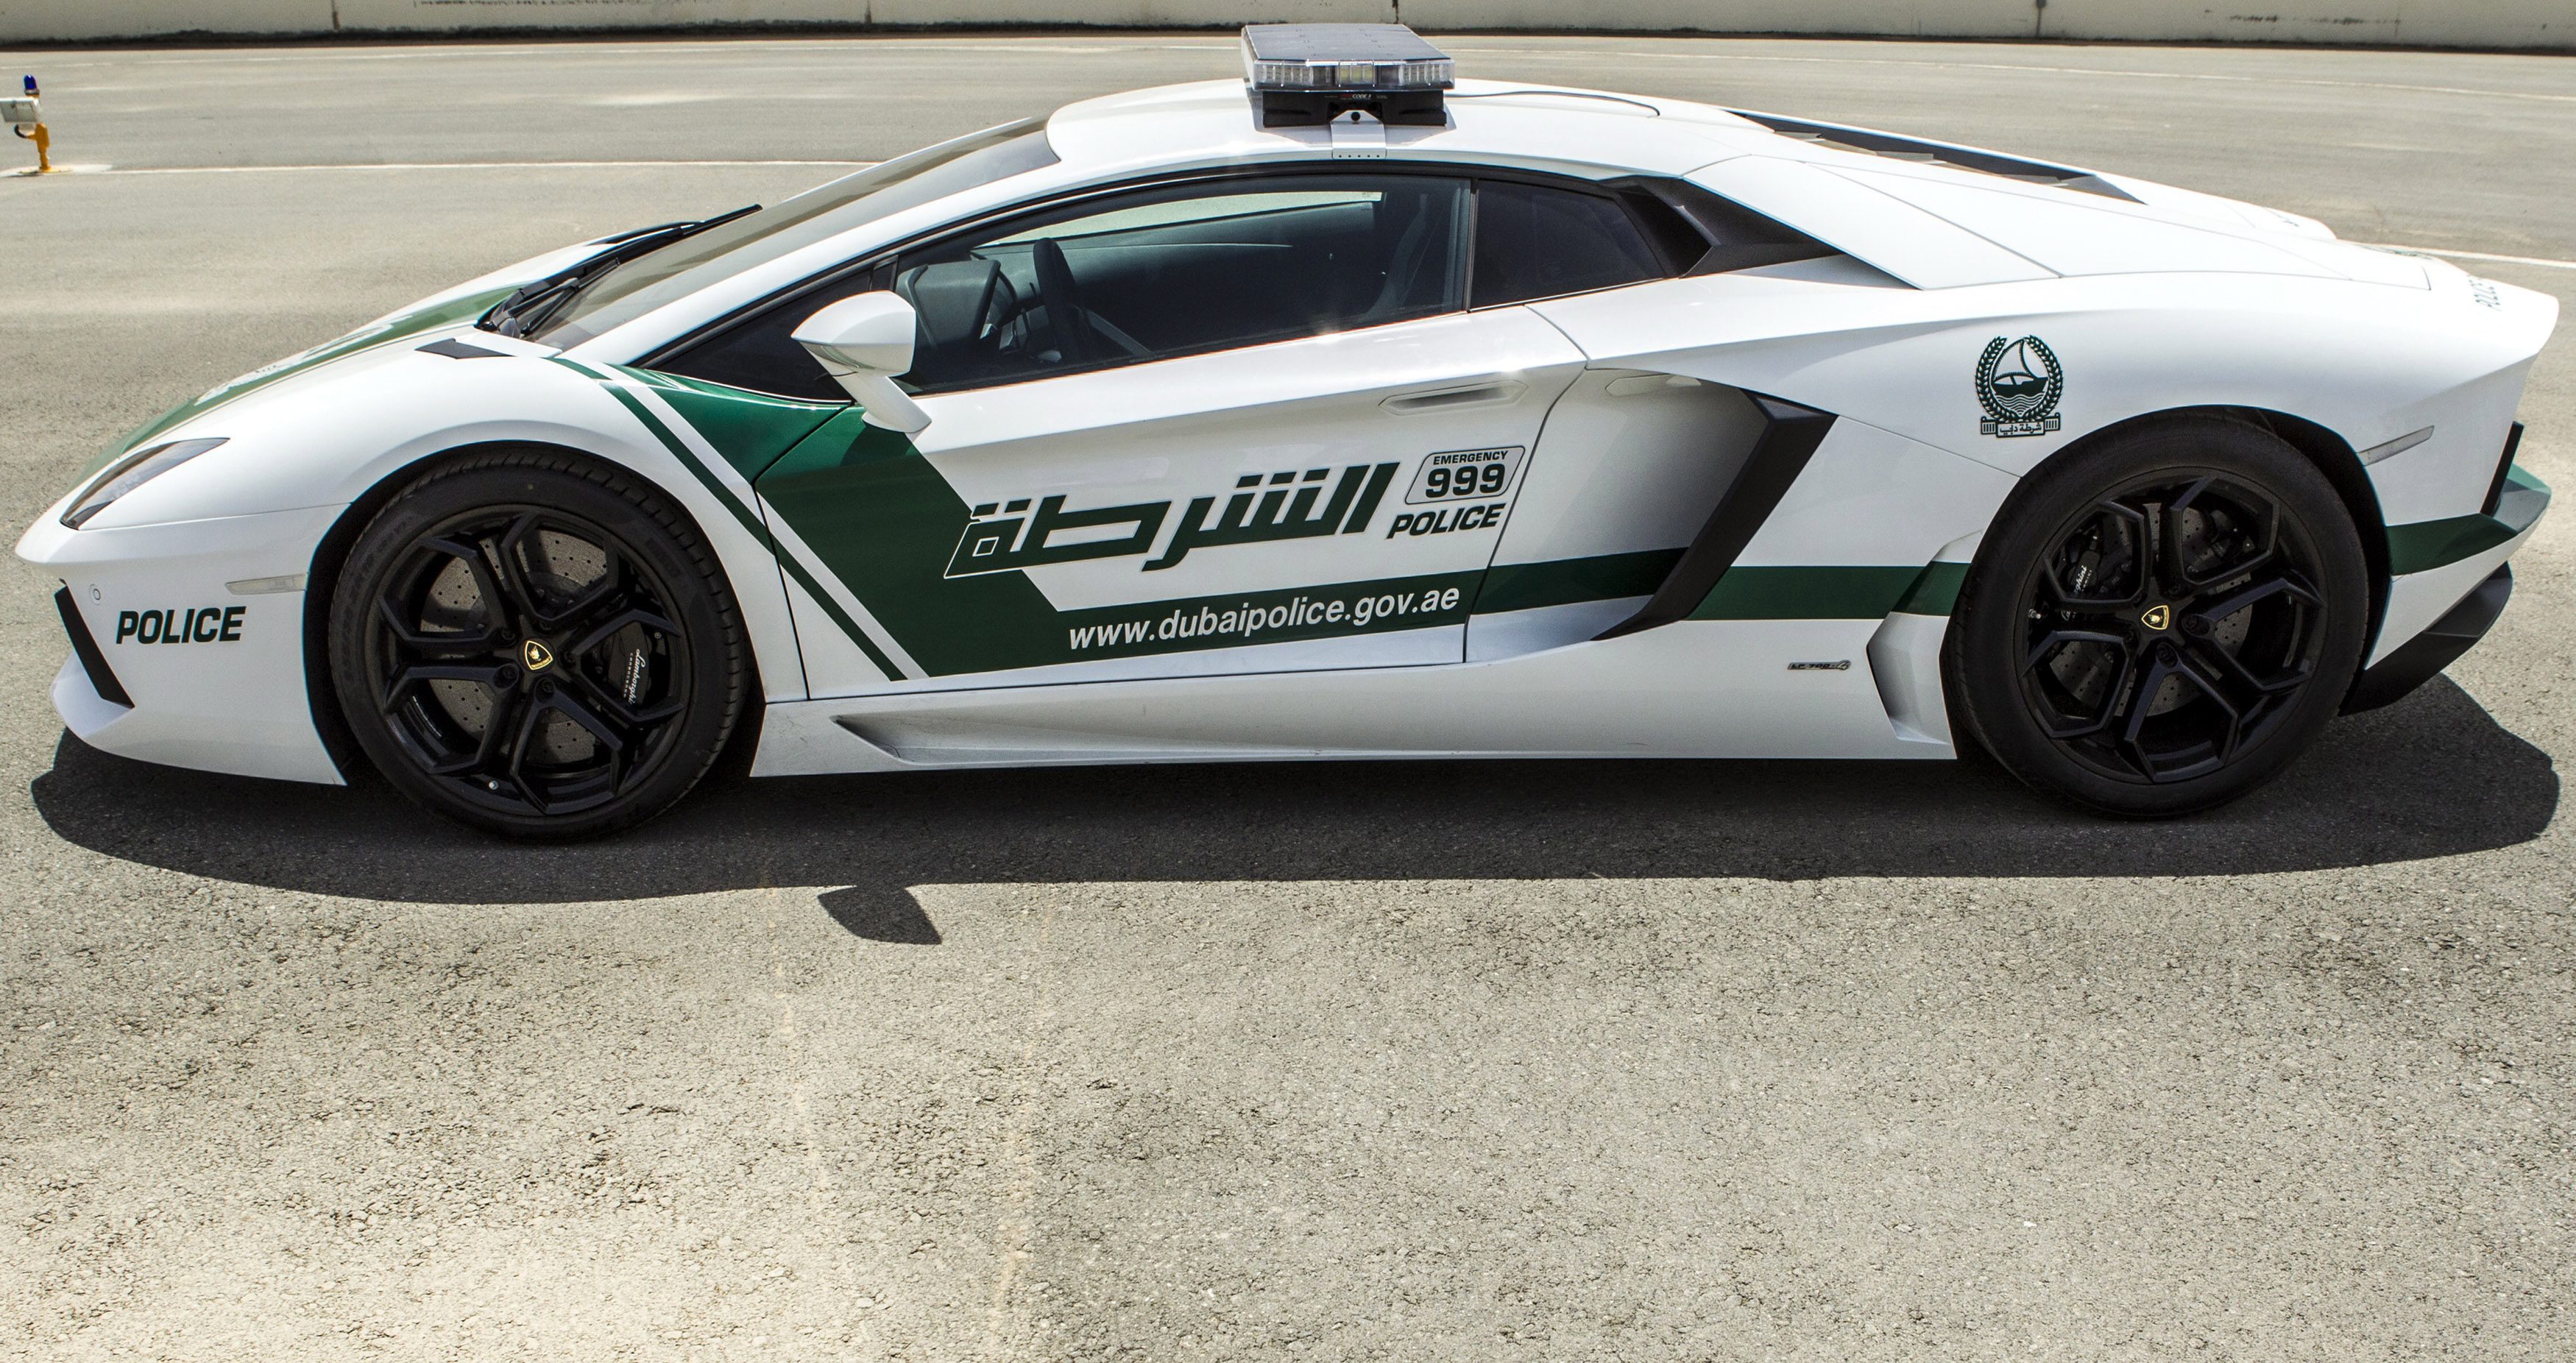 5 Uae Dubai Police Lamborghini HD Wallpapers | Backgrounds ...